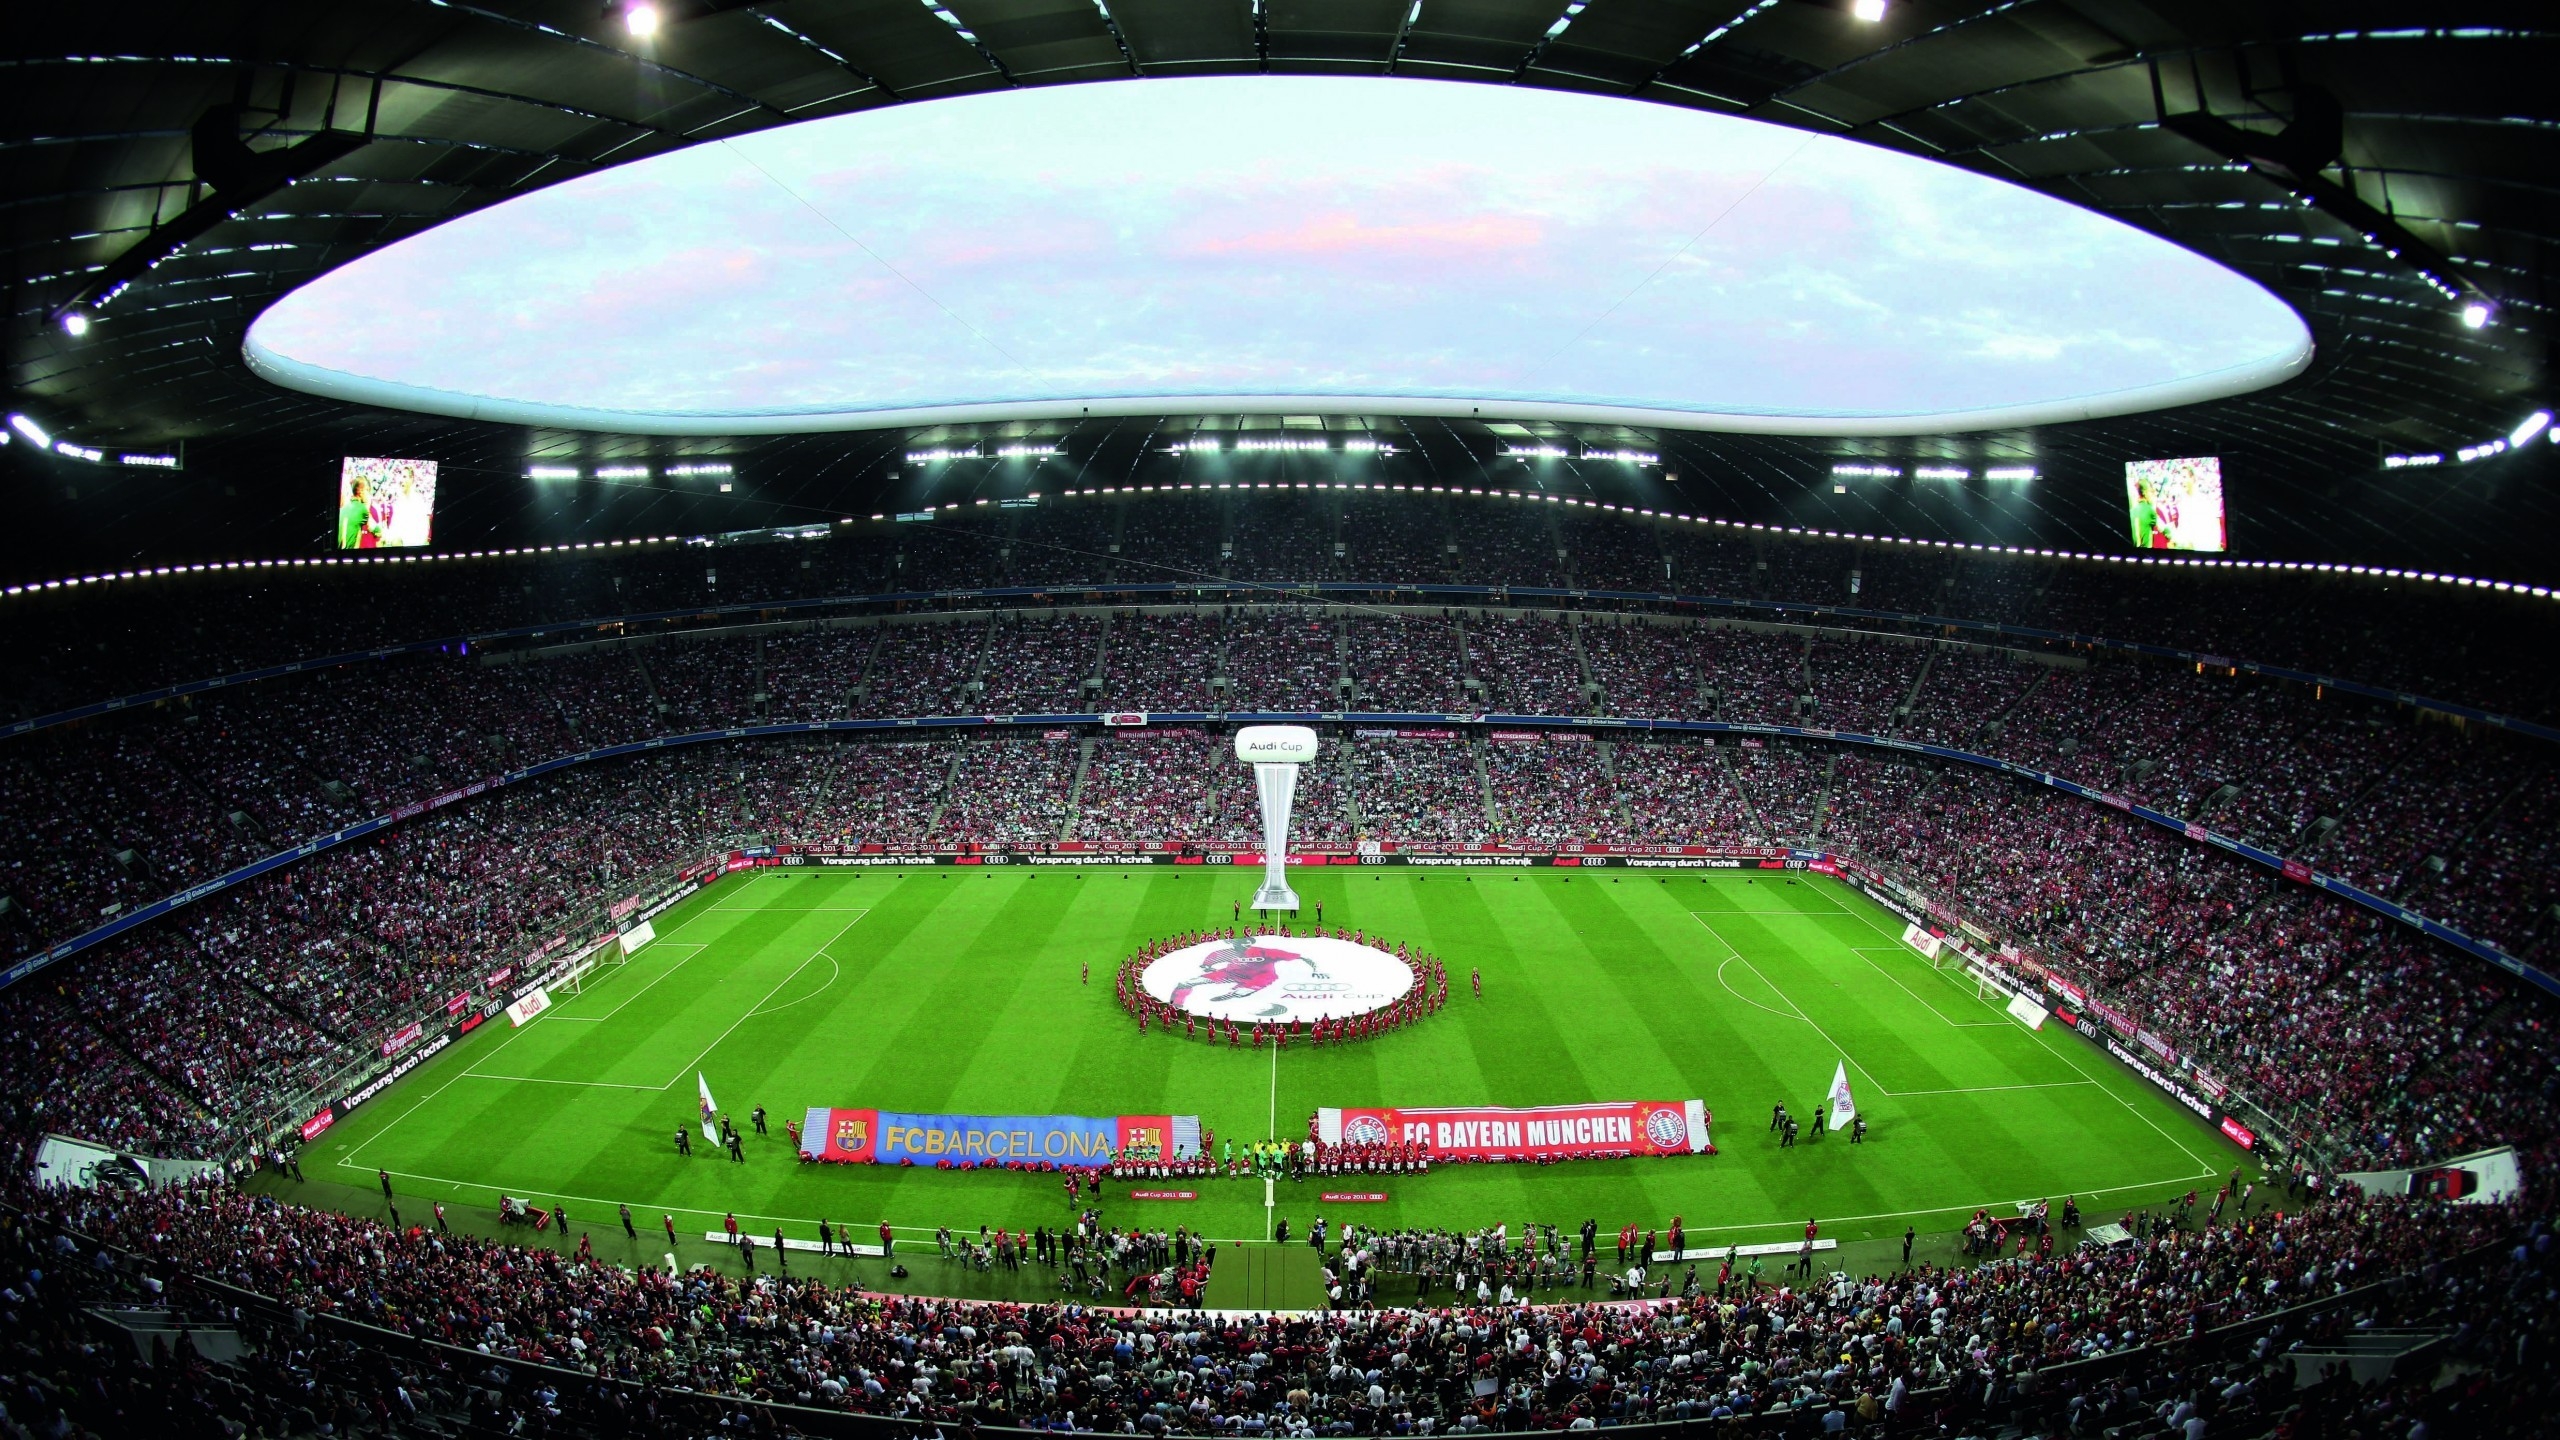 Barcelona vs Bayern Munich for 2560x1440 HDTV resolution